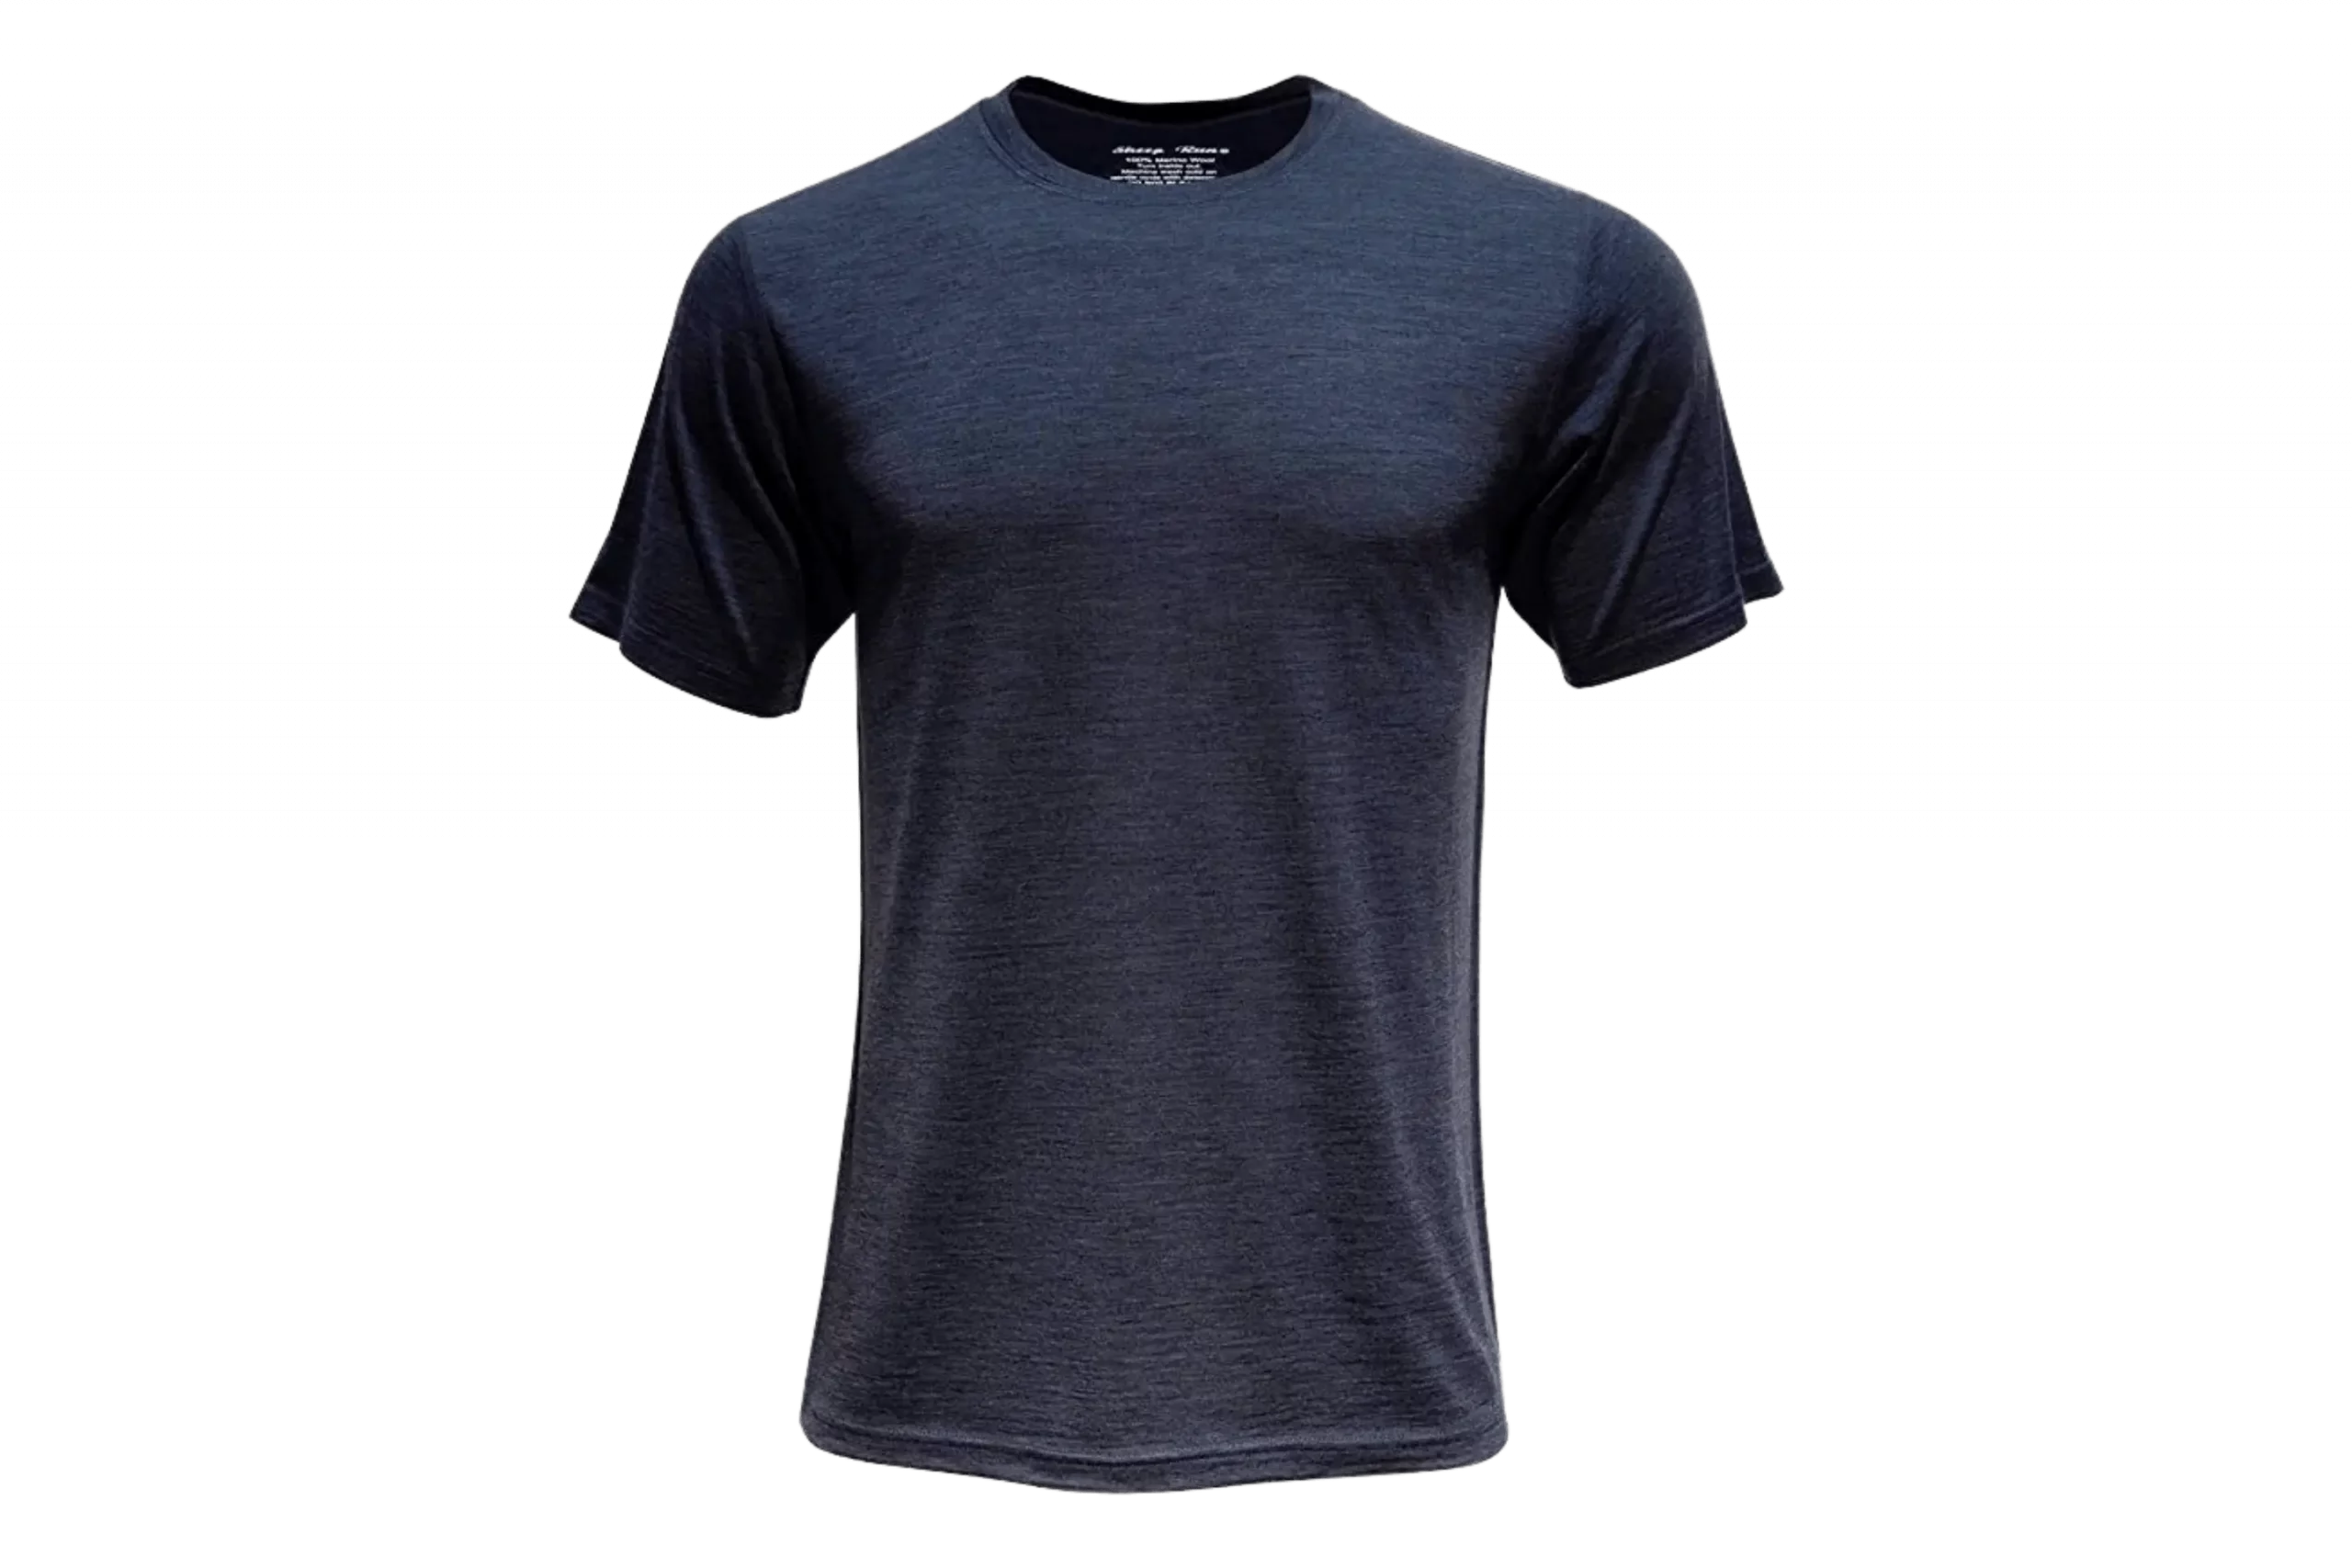 SHEEP RUN Men's Workout Breathable Base Layer T-Shirt